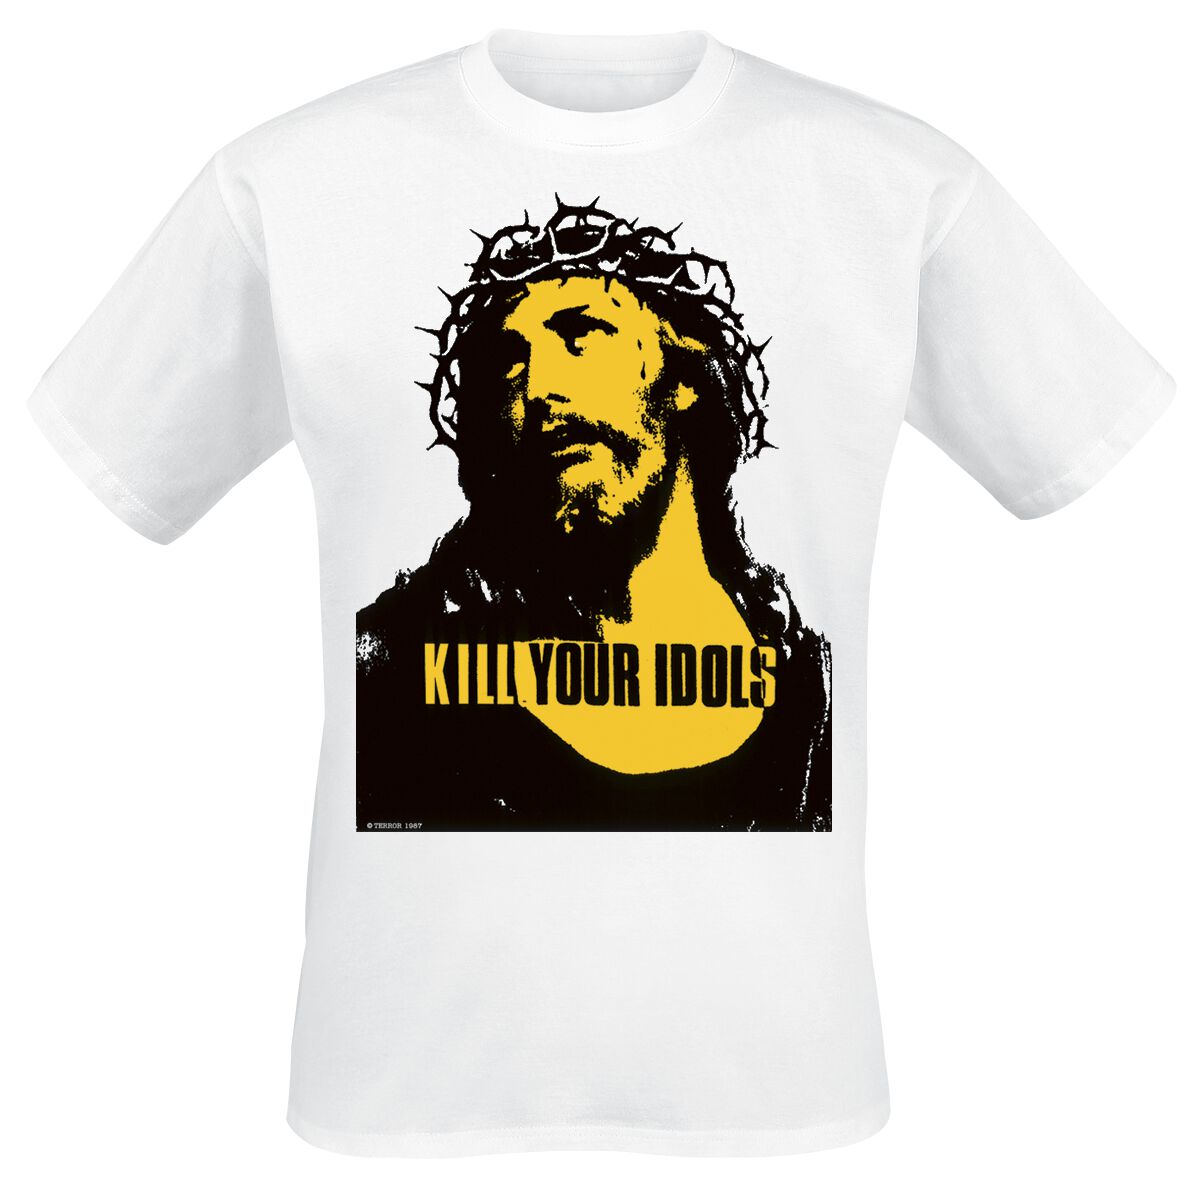 Sprüche  Kill Your Idols (Band)  T-Shirt  weiß